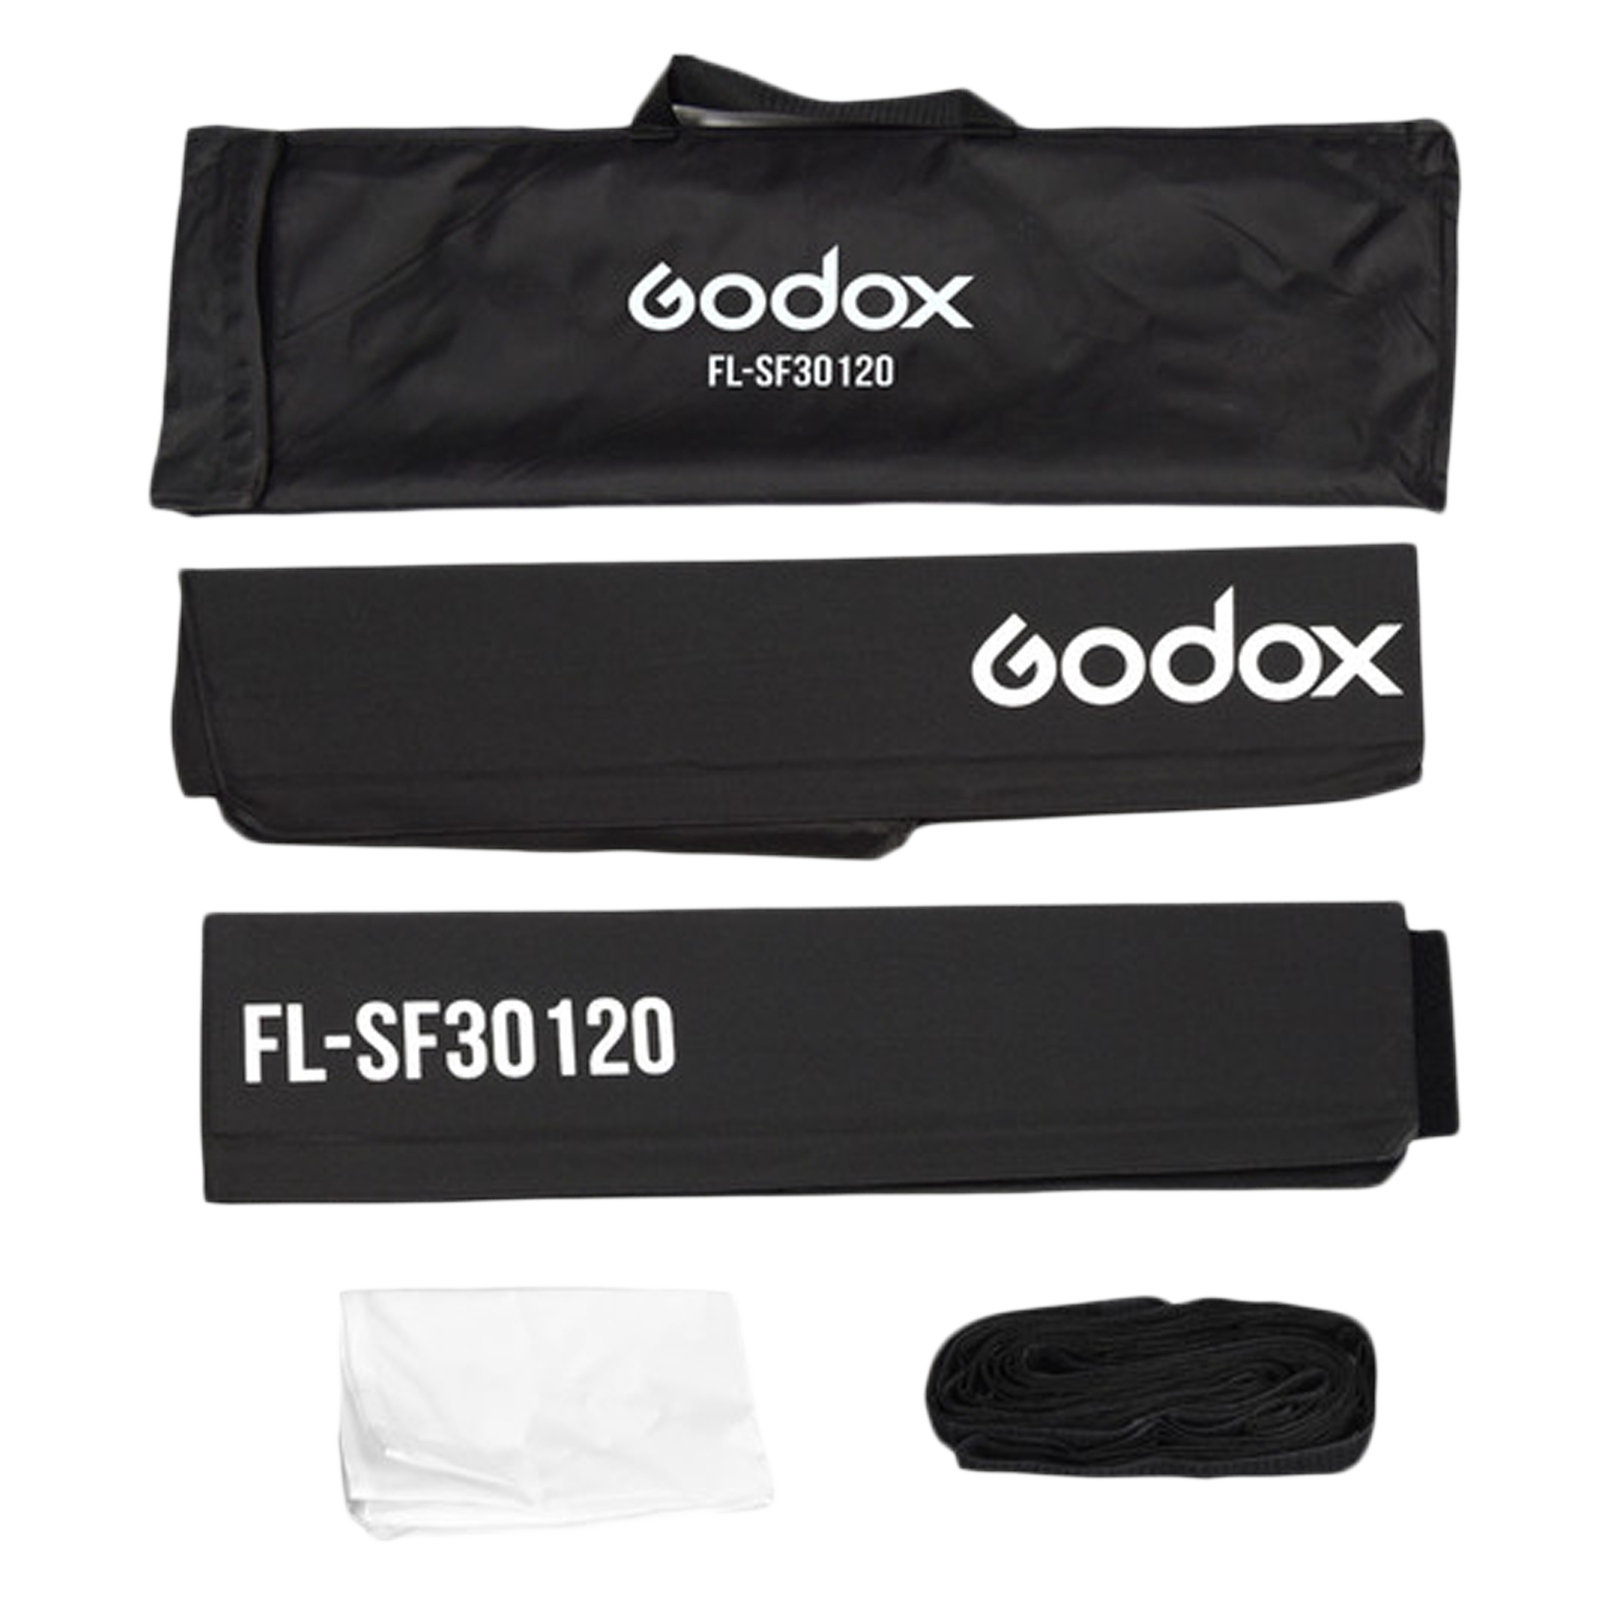 Godox FL Series Softbox with Grid, Diffuser & Bag for FL150R LED Panel (Lightweight & Portable)